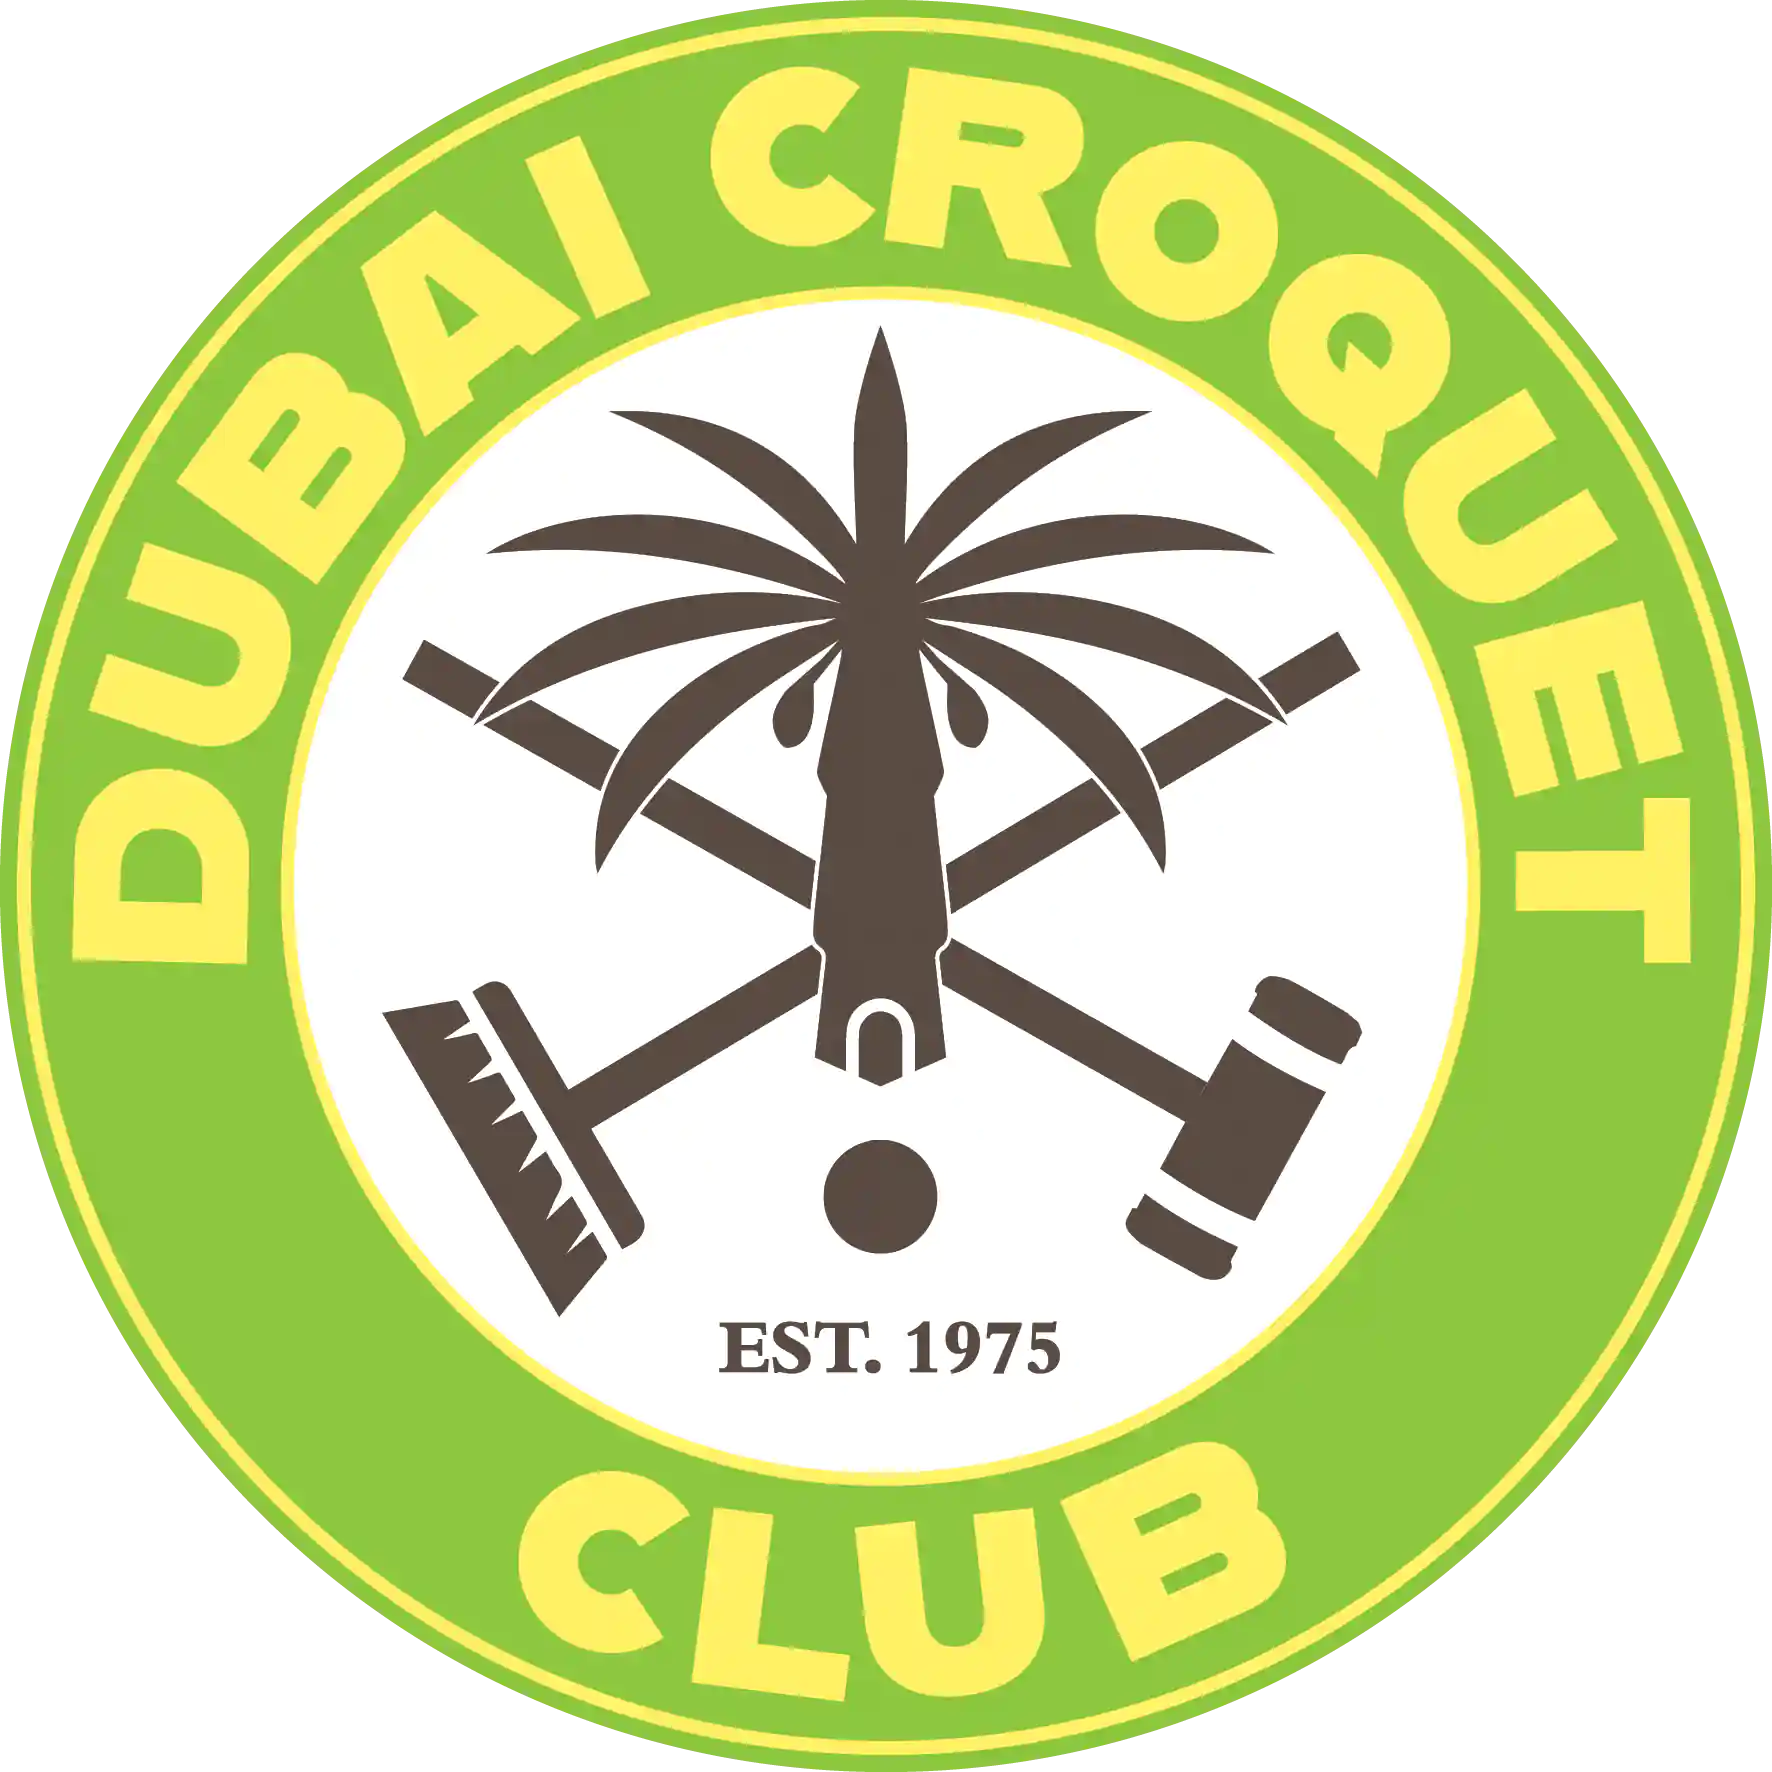 Dubai Croquet Club